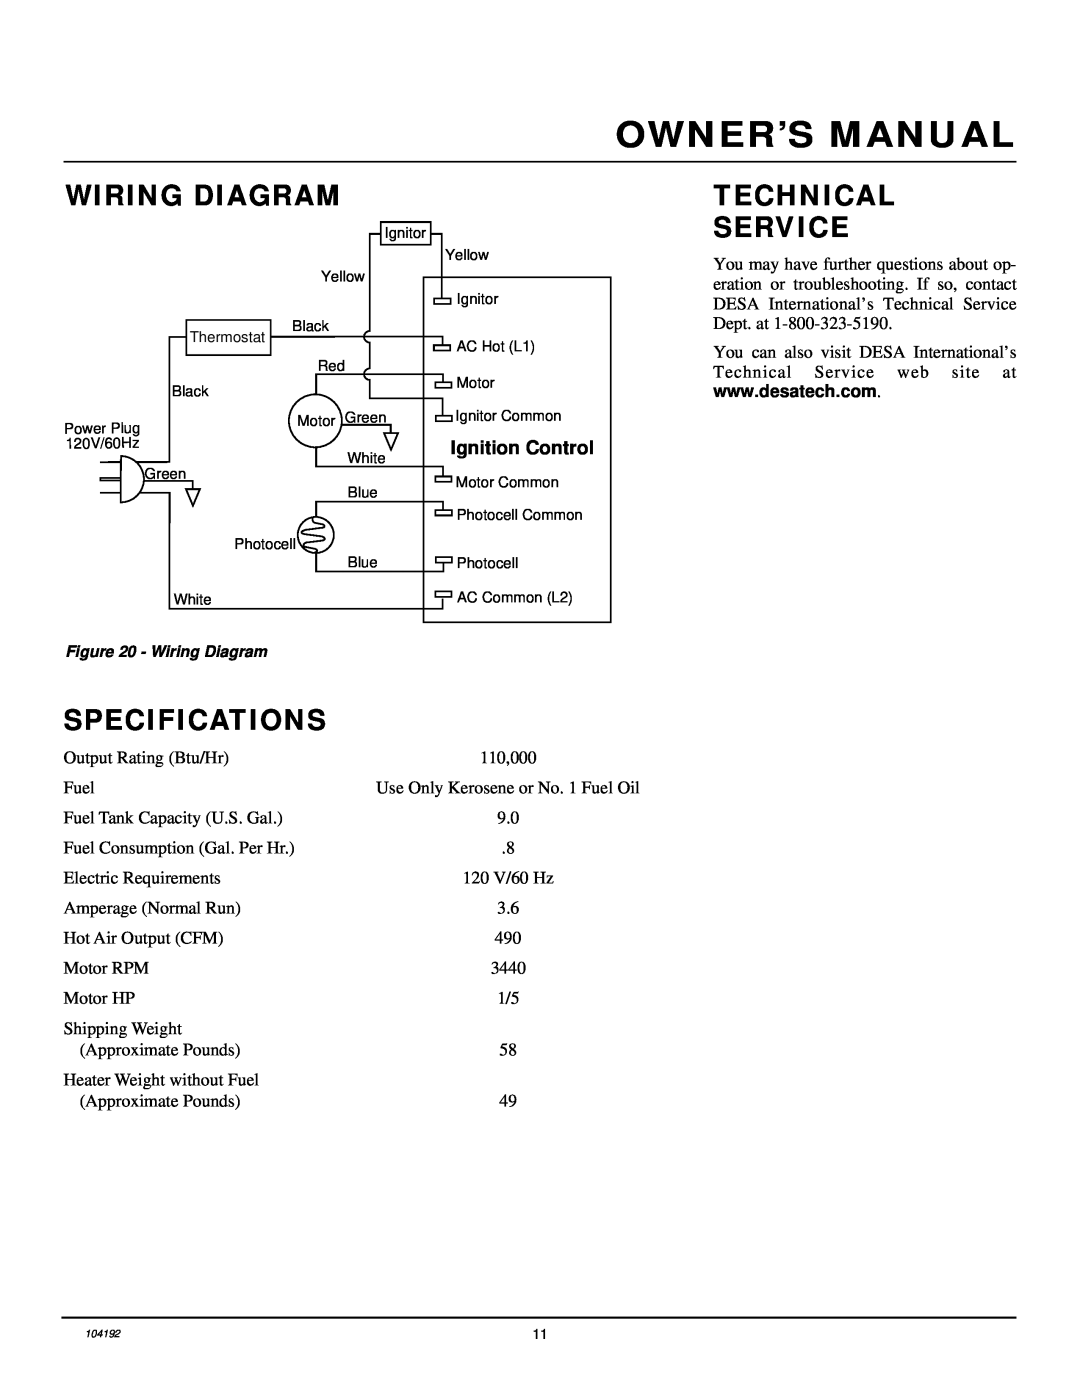 Desa B110BT, R110BT, REM110BT owner manual Wiring Diagram, Technical Service, Specifications, Ignition Control 